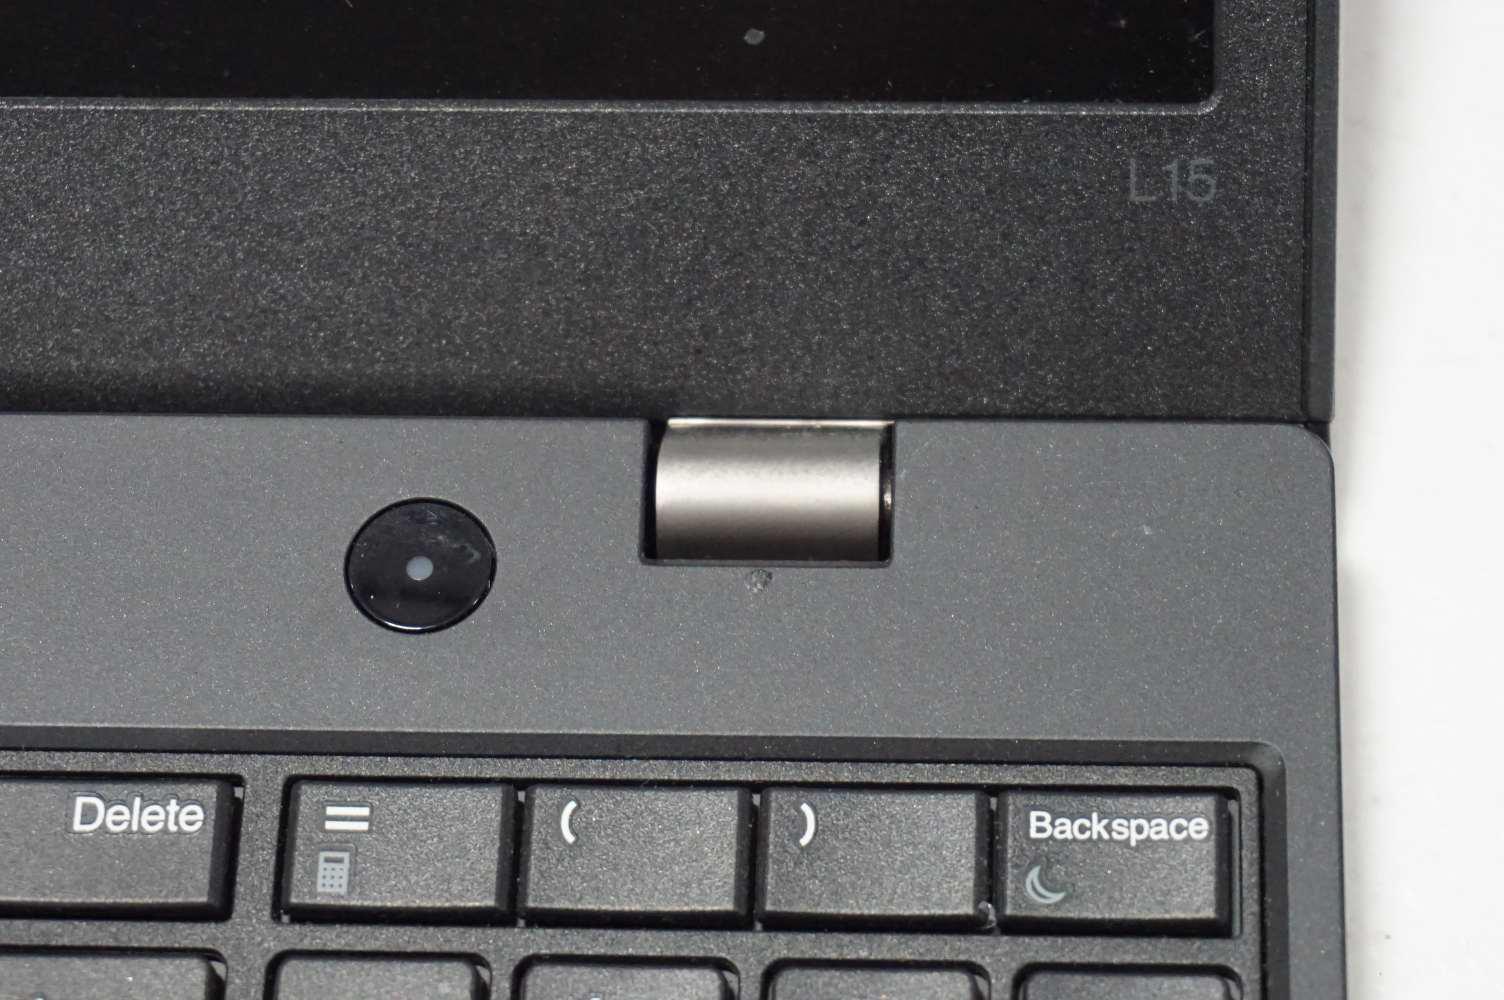 Lenovo L15 Pro 7 ThinkPad Laptop (Ser#PF34GXG6)